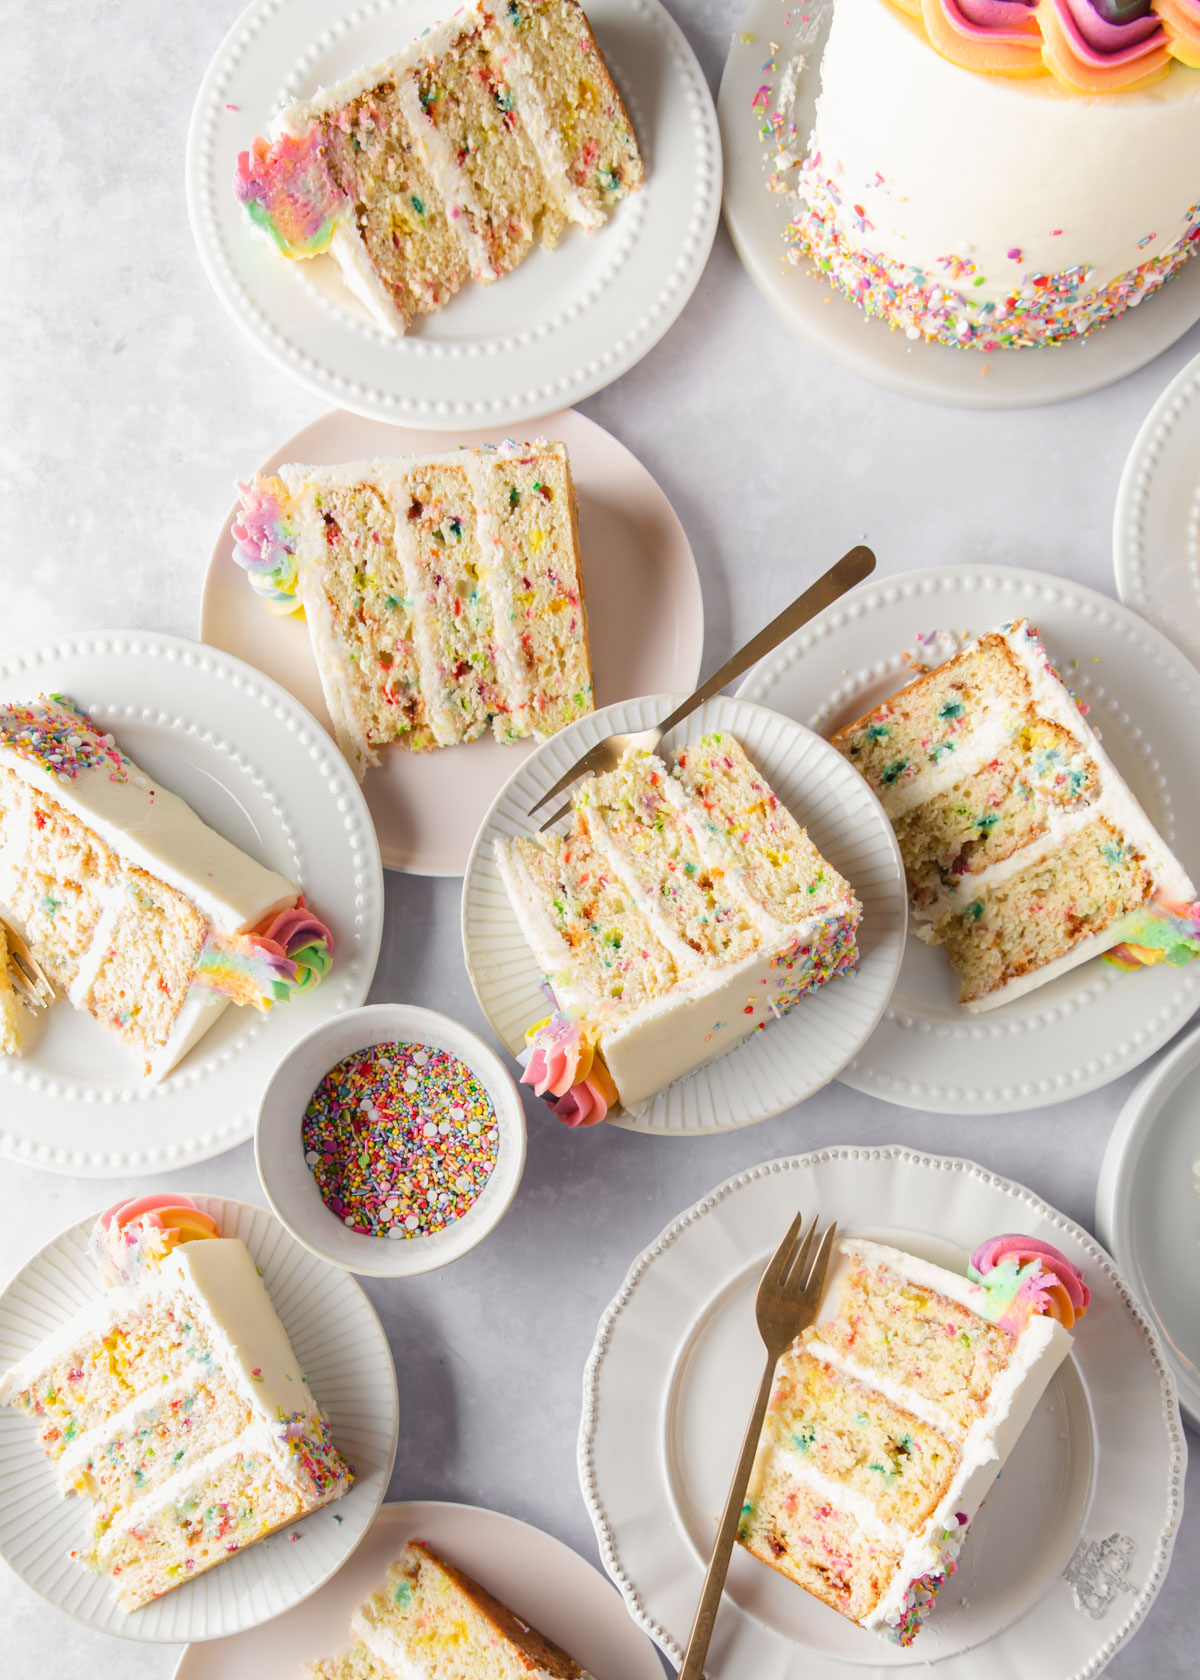 An overhead image of multiple slices of rainbow sprinkle cake